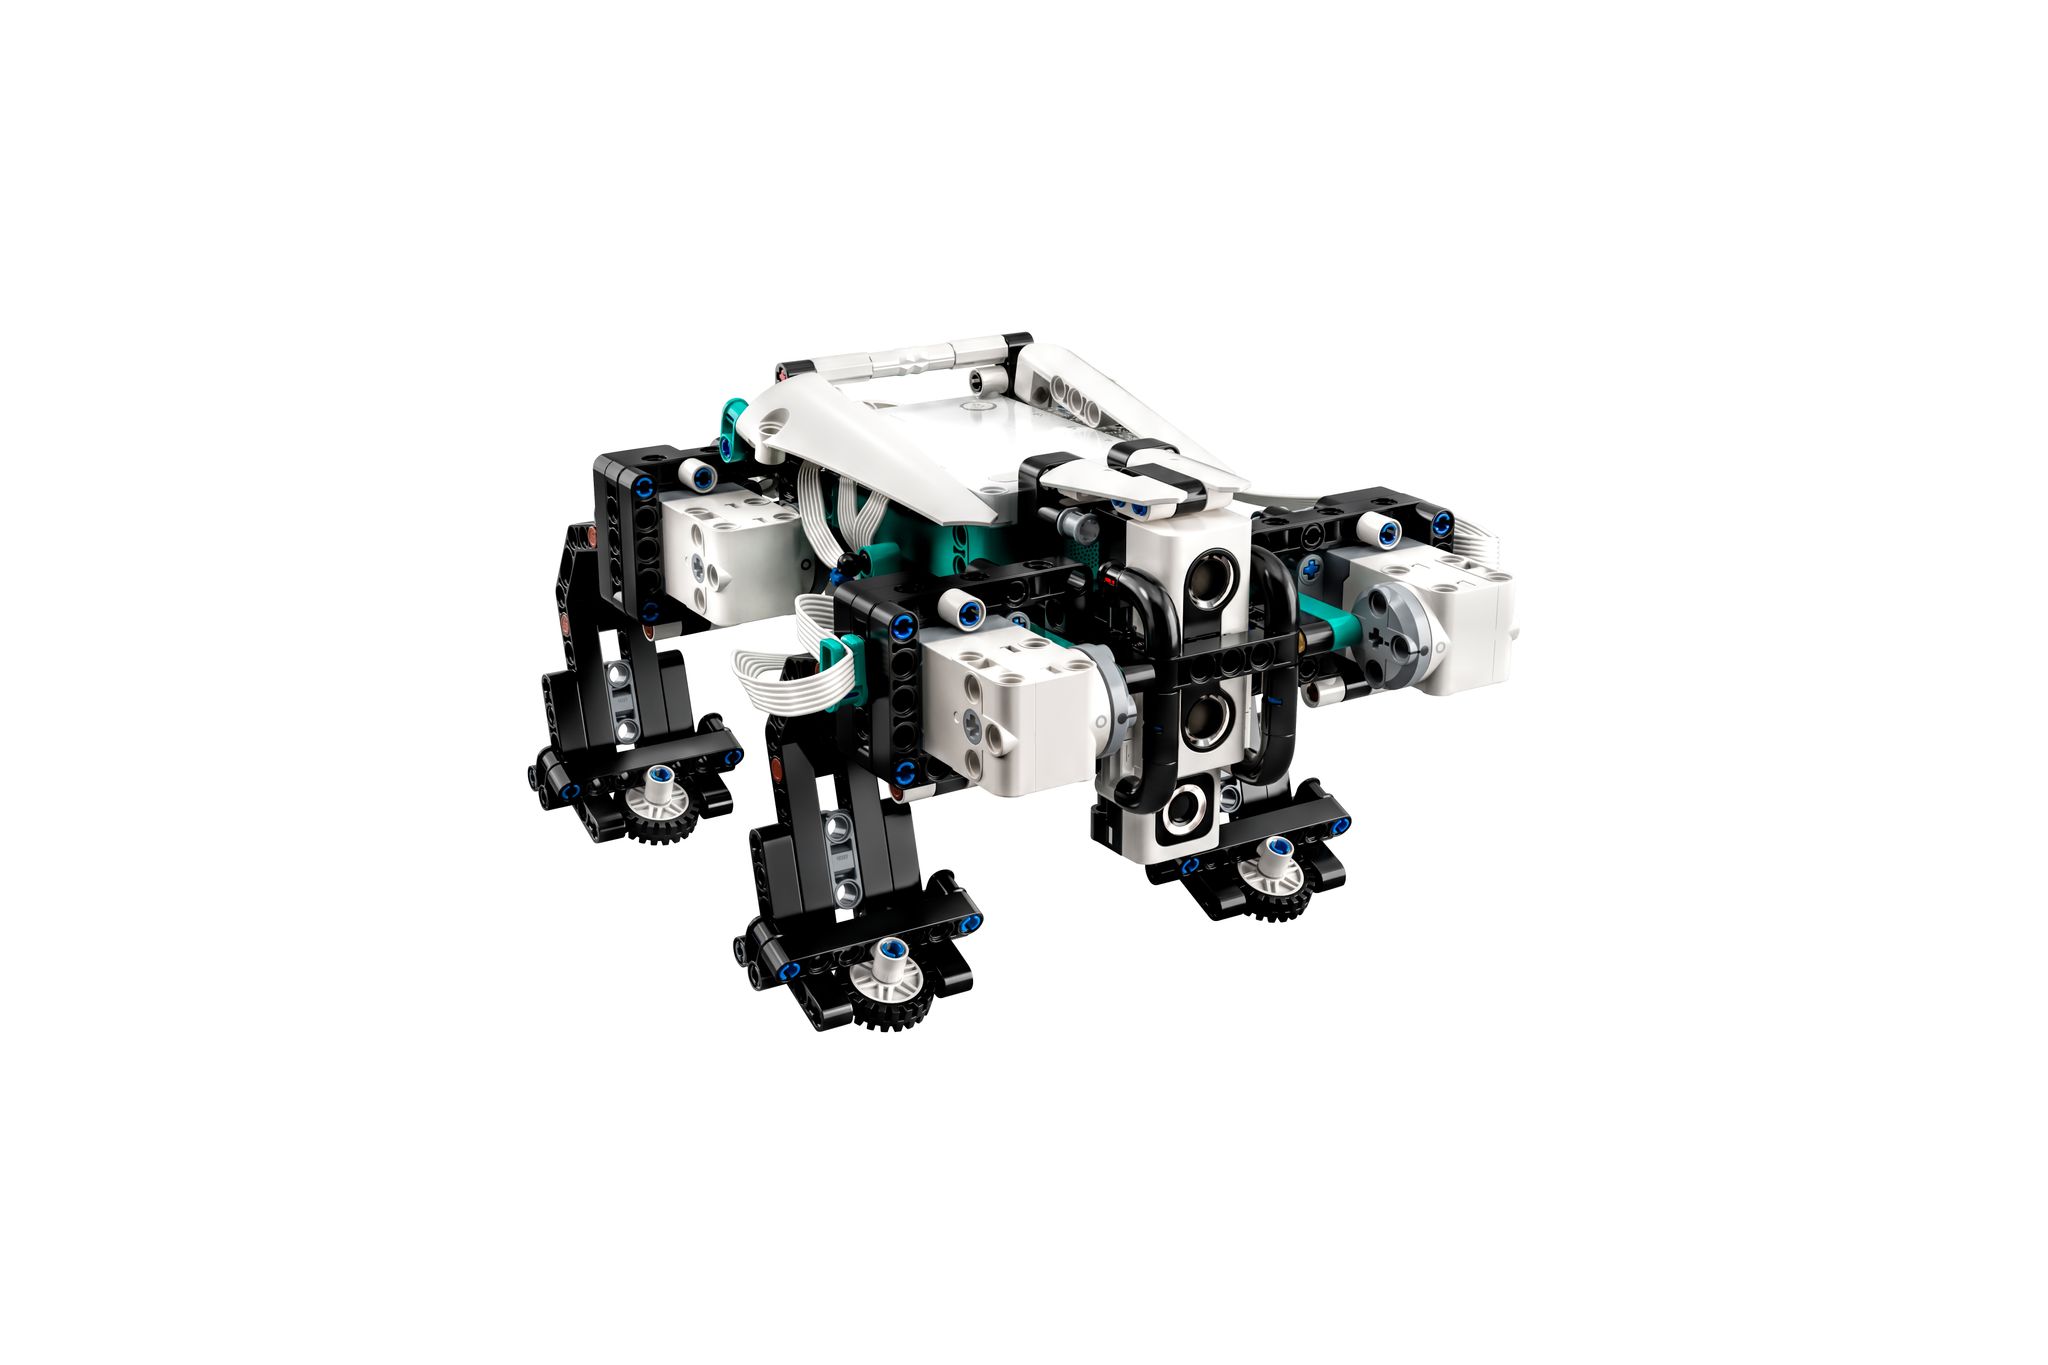 Dirigir Contemporáneo Biblia Lego Mindstorms permite programar robots jugando - Infobae